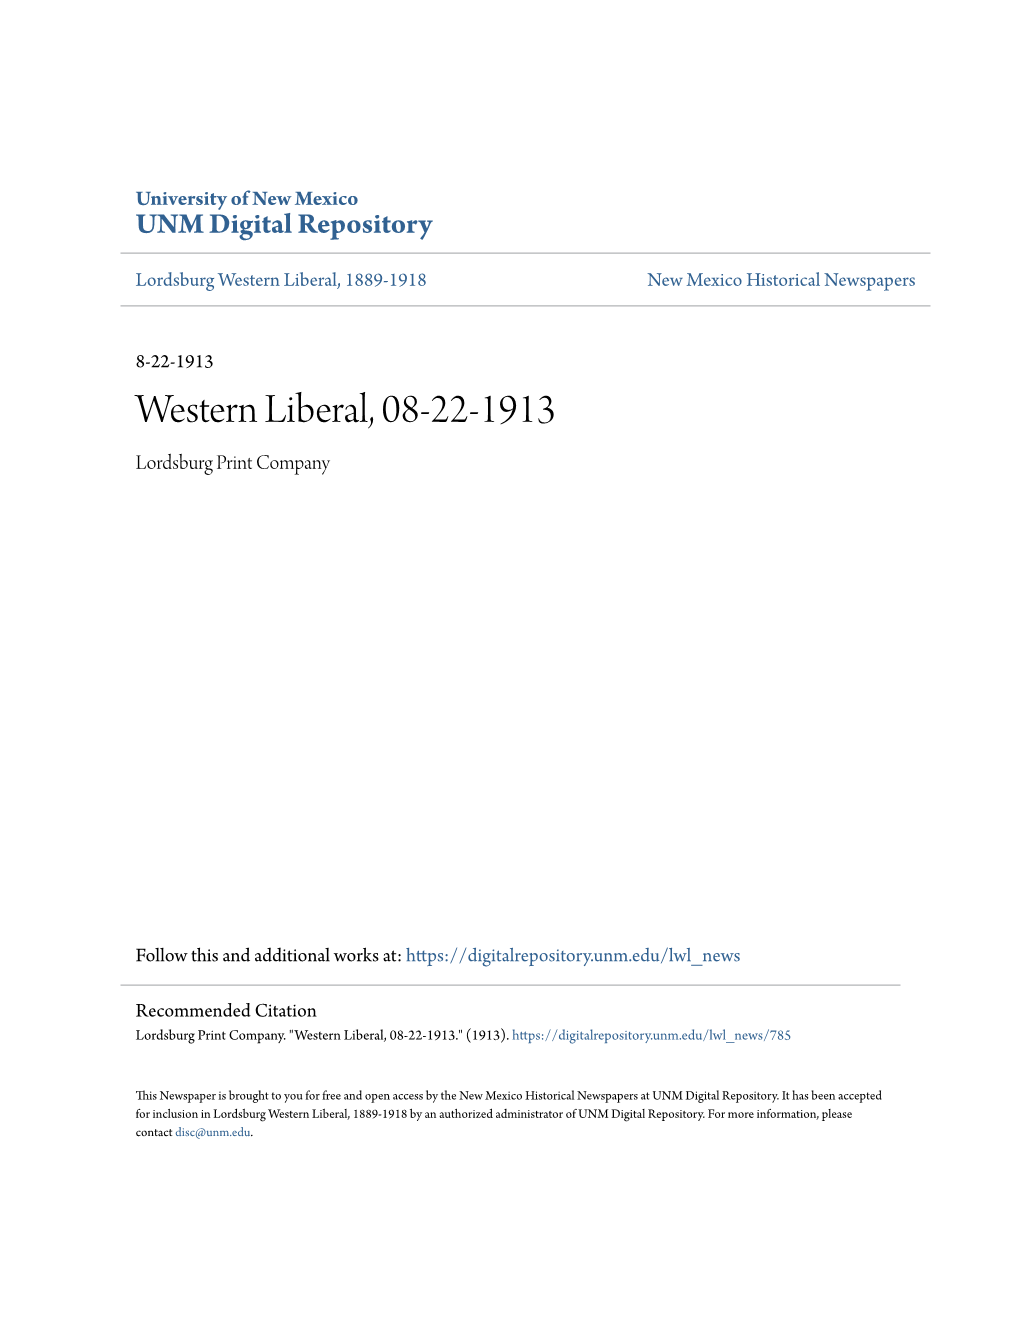 Western Liberal, 08-22-1913 Lordsburg Print Company